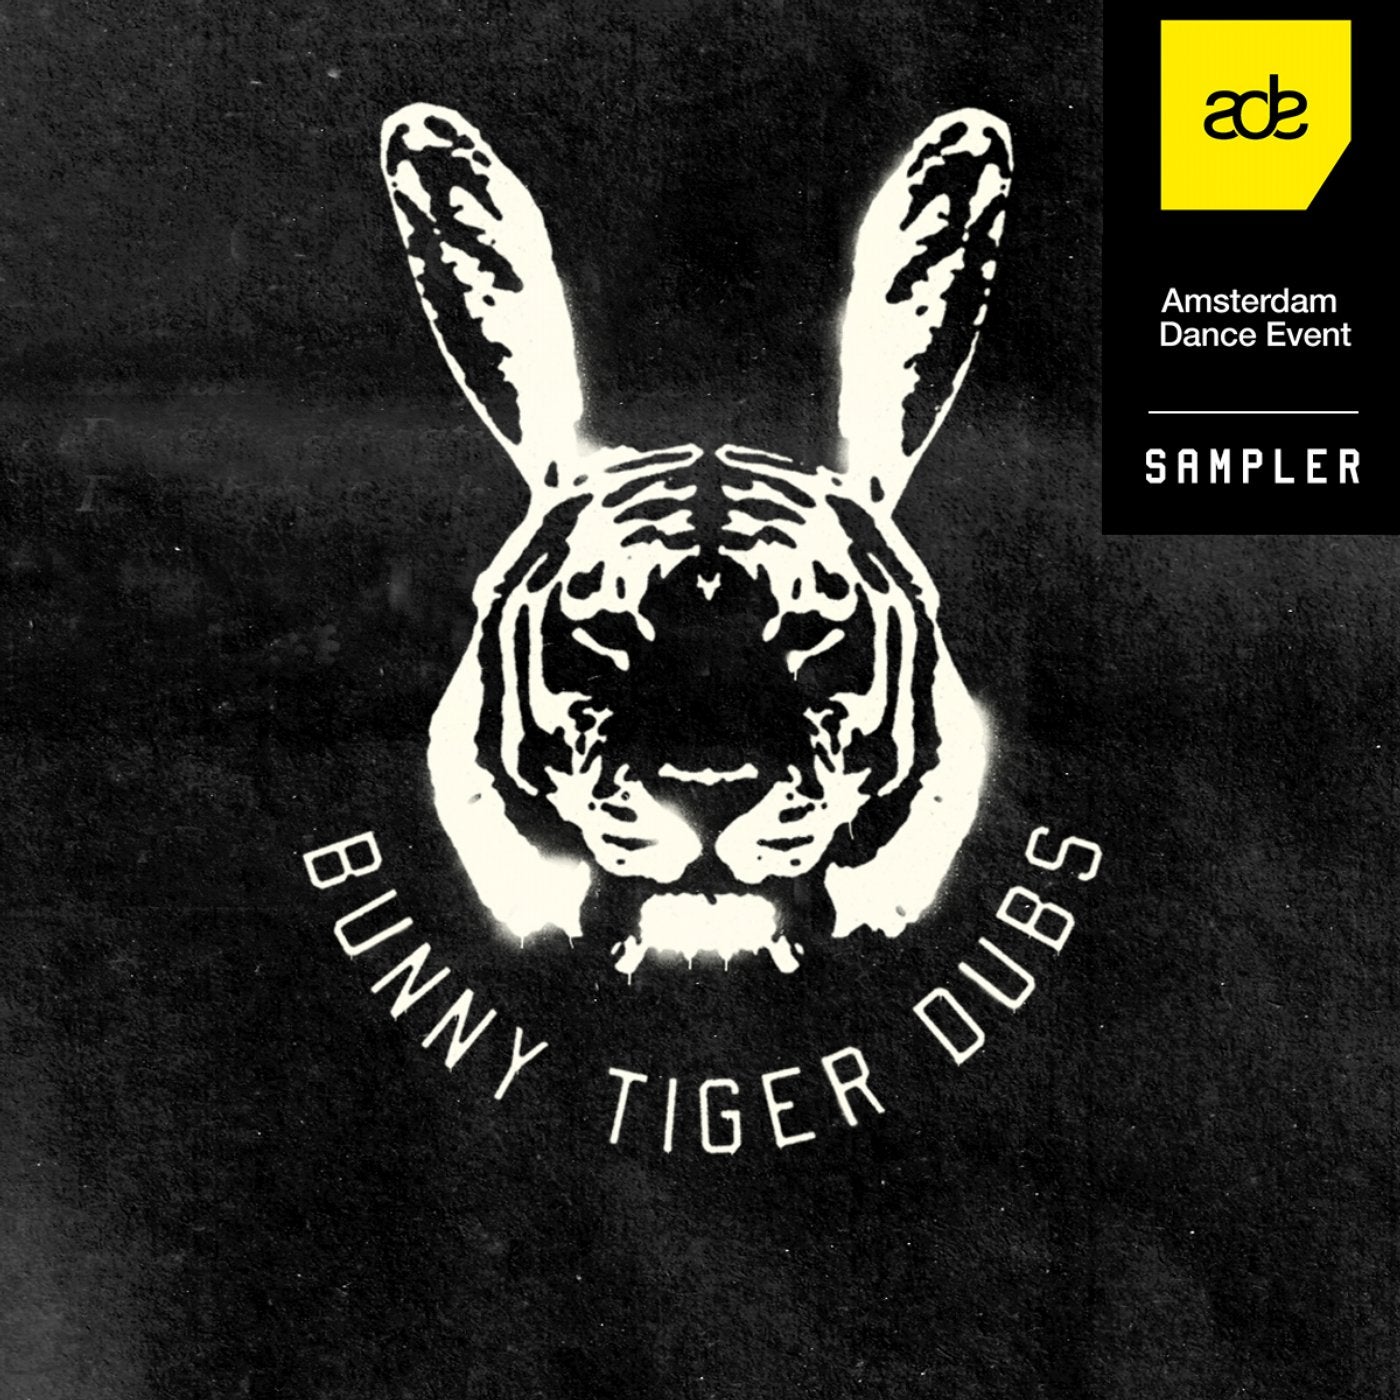 Bunny Tiger Dubs ADE Sampler 2016